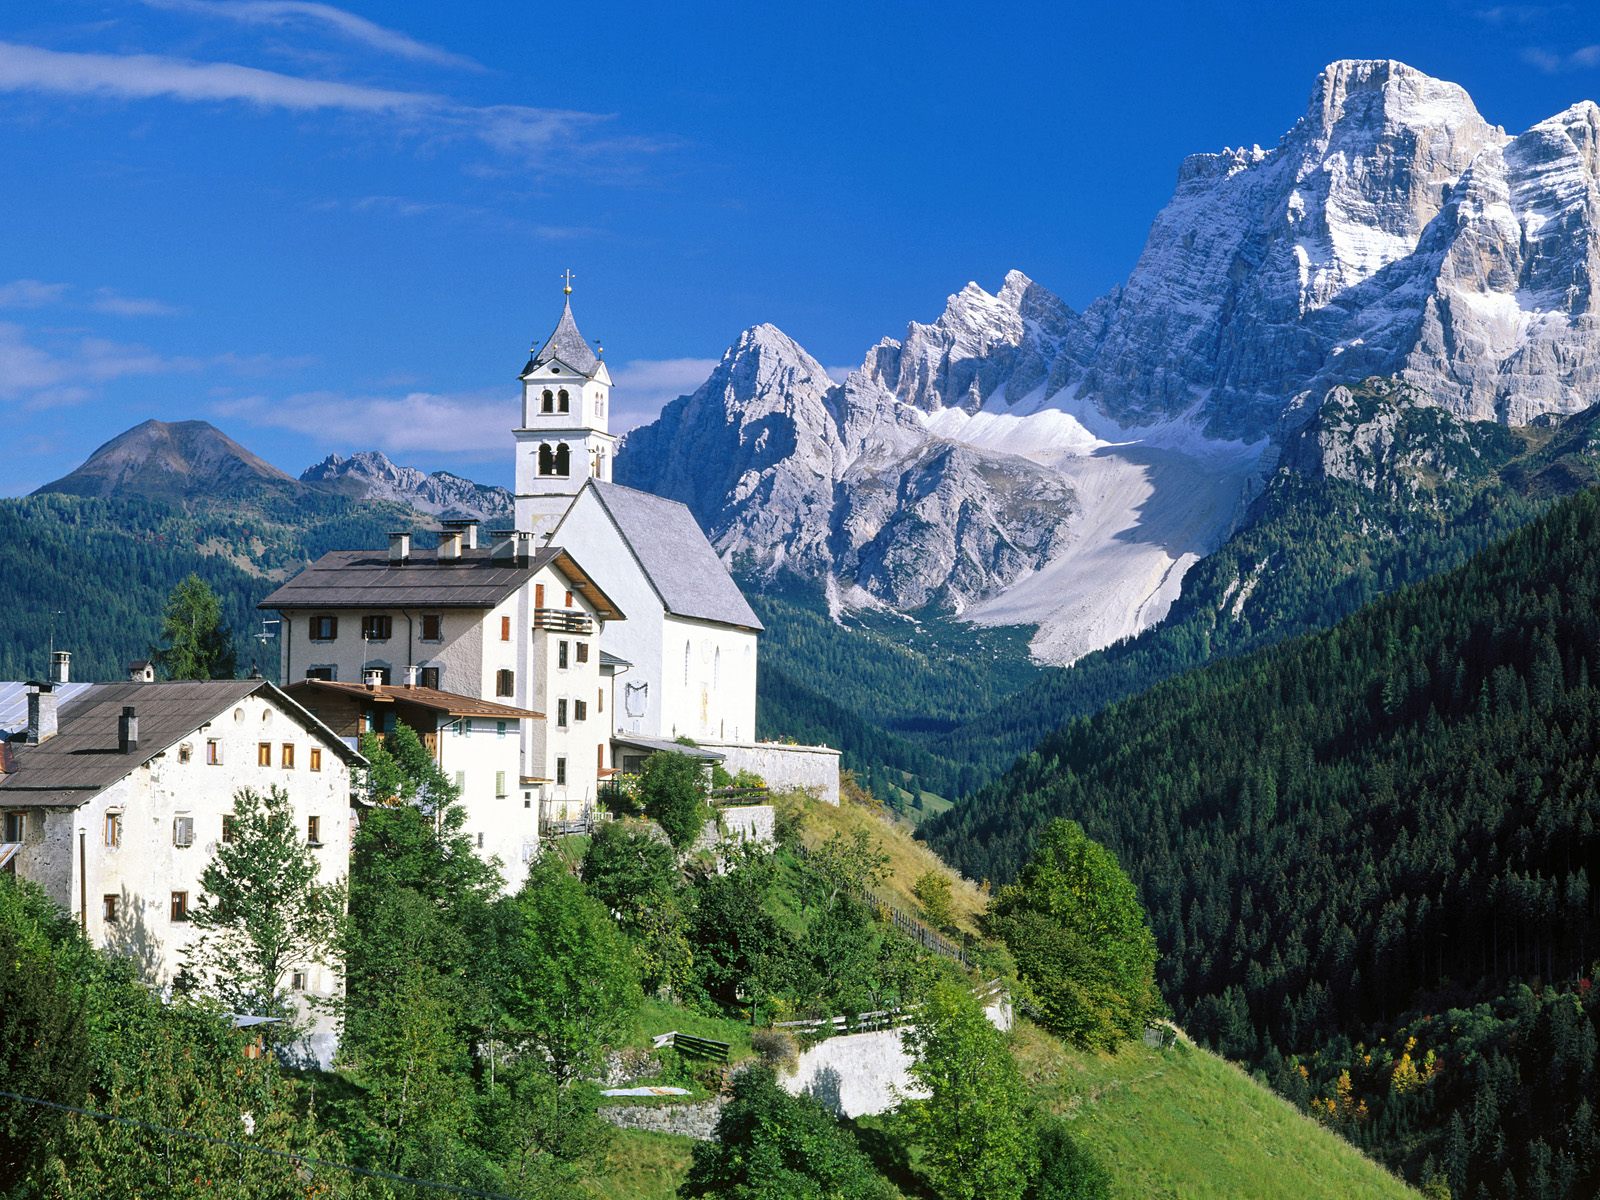 http://1.bp.blogspot.com/-siELheqI2F4/Tcp4shhWUqI/AAAAAAAACYA/I4HCw3O--PA/s1600/The+Dolomites%252C+Alps%252C+Italy.jpg